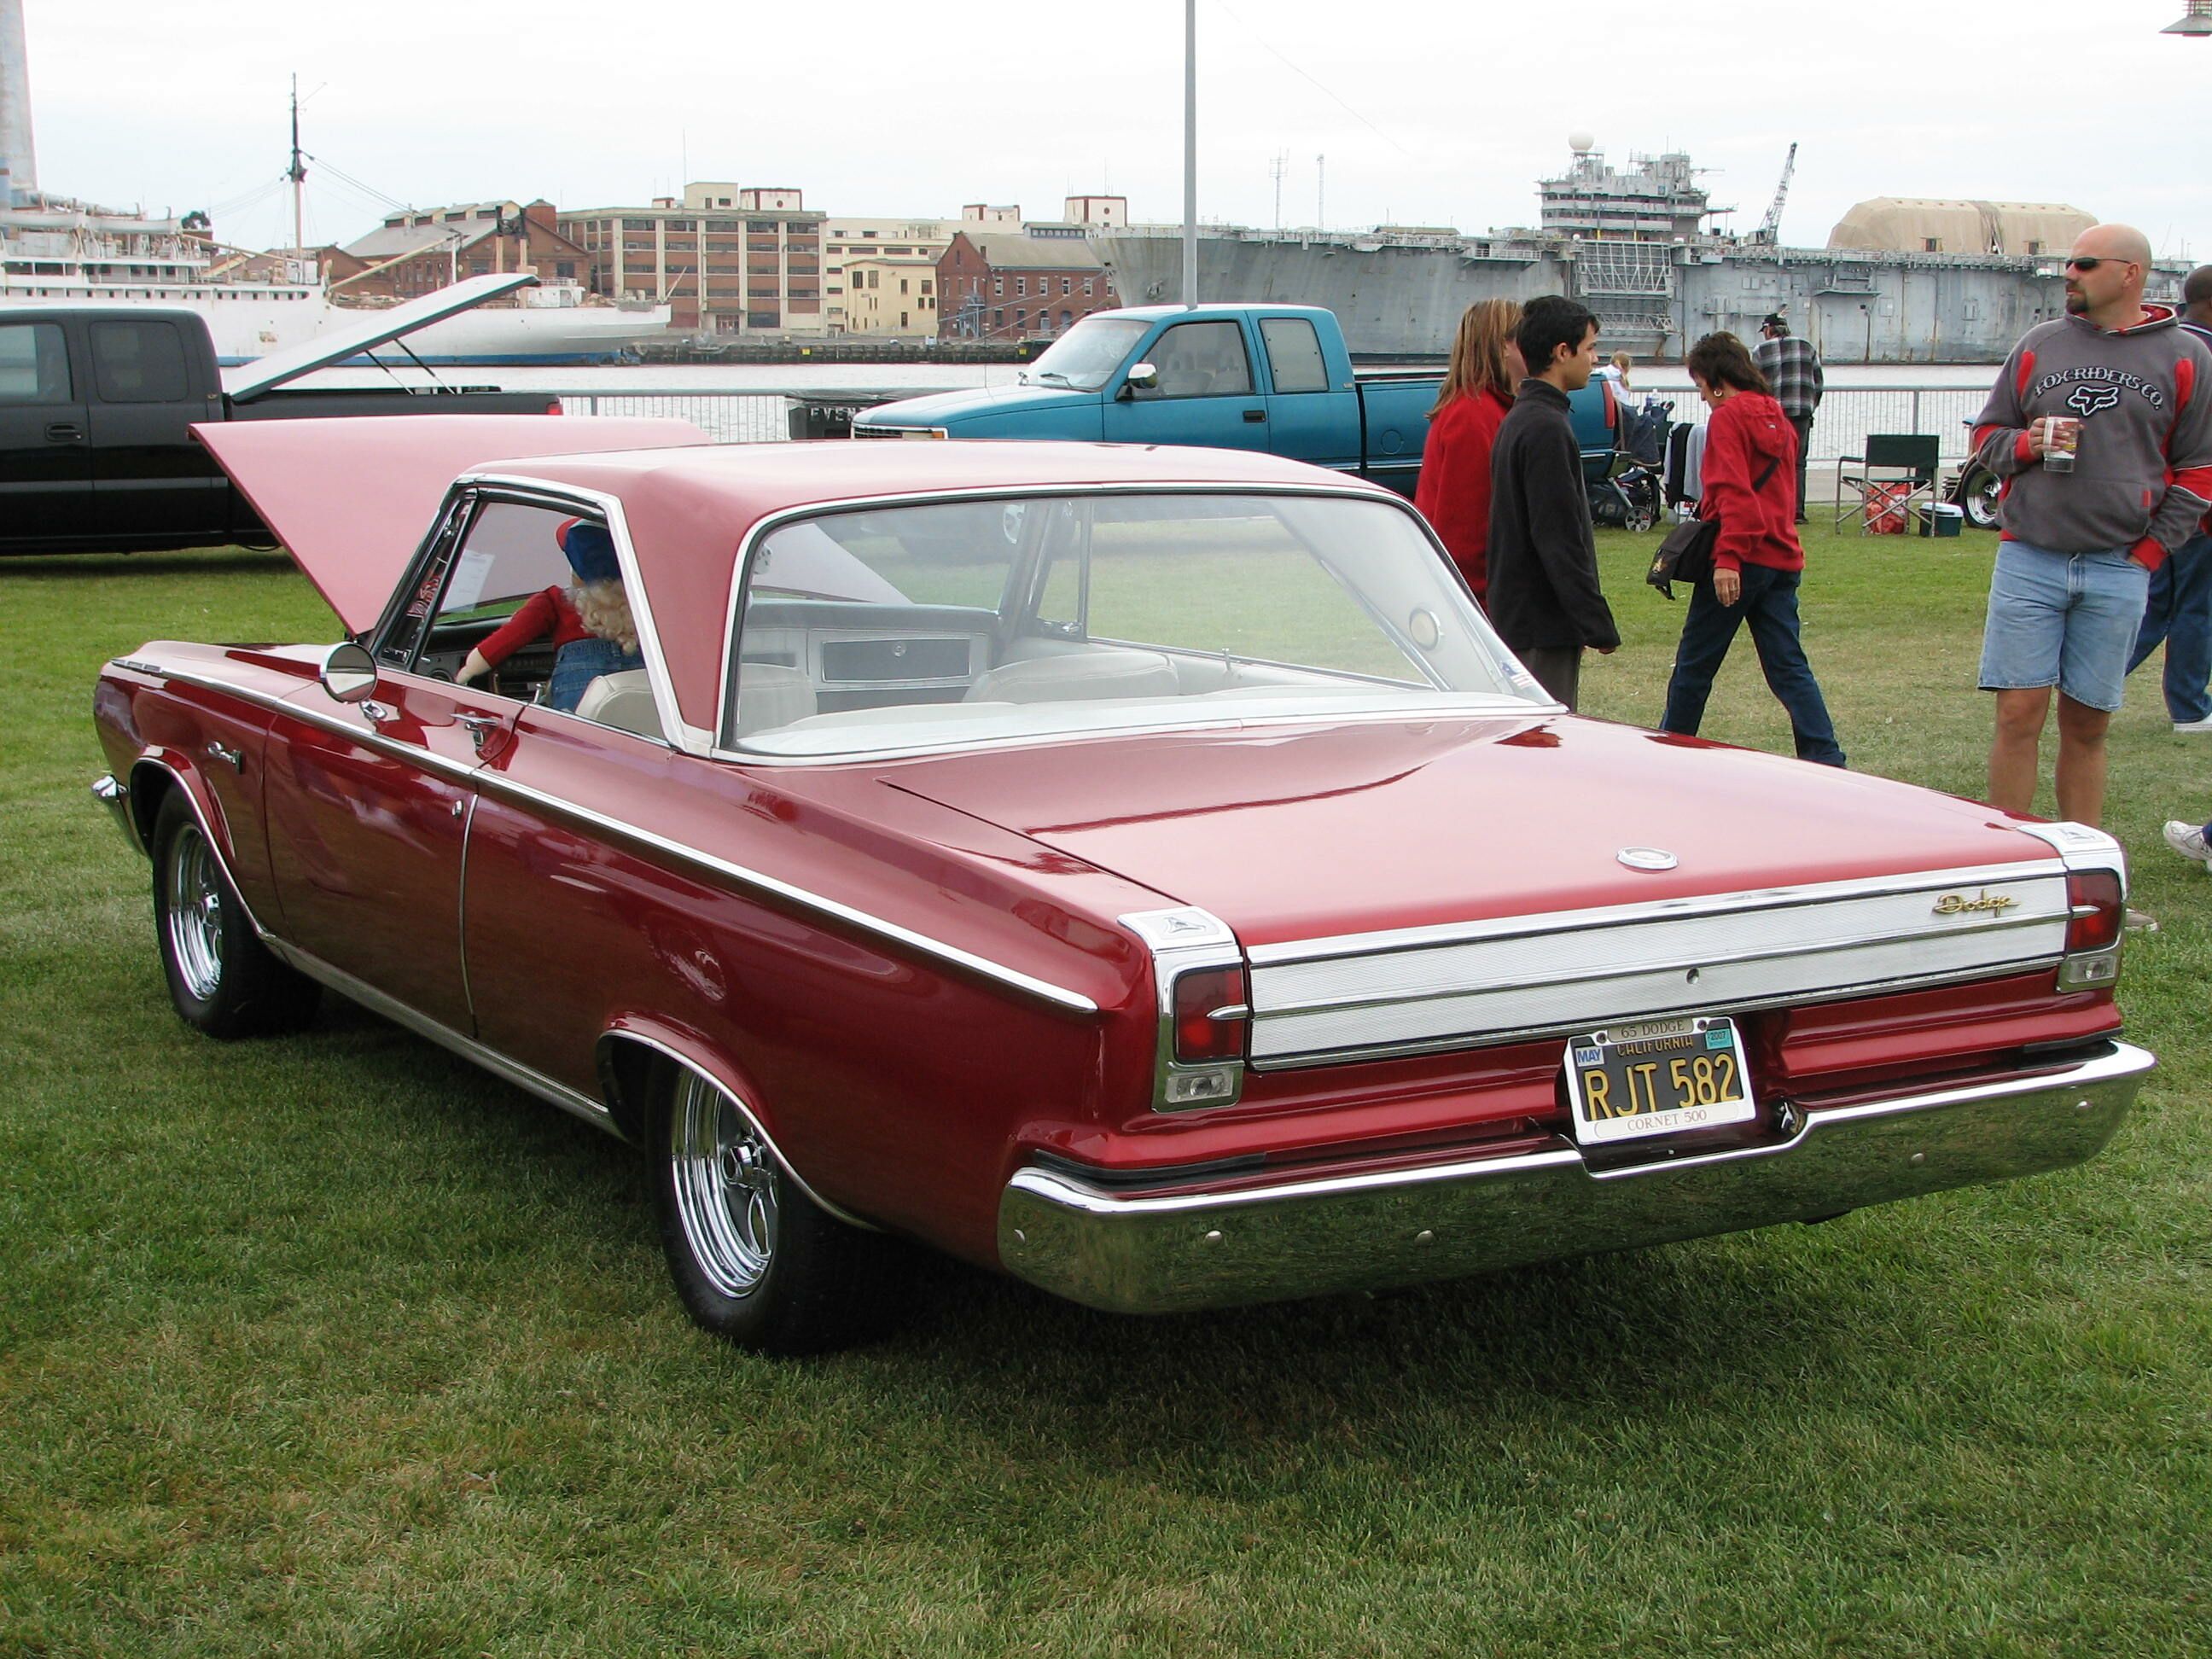 1965 Dodge Coronet (Custom) 'RJT 582' 2 | Flickr - Photo Sharing!